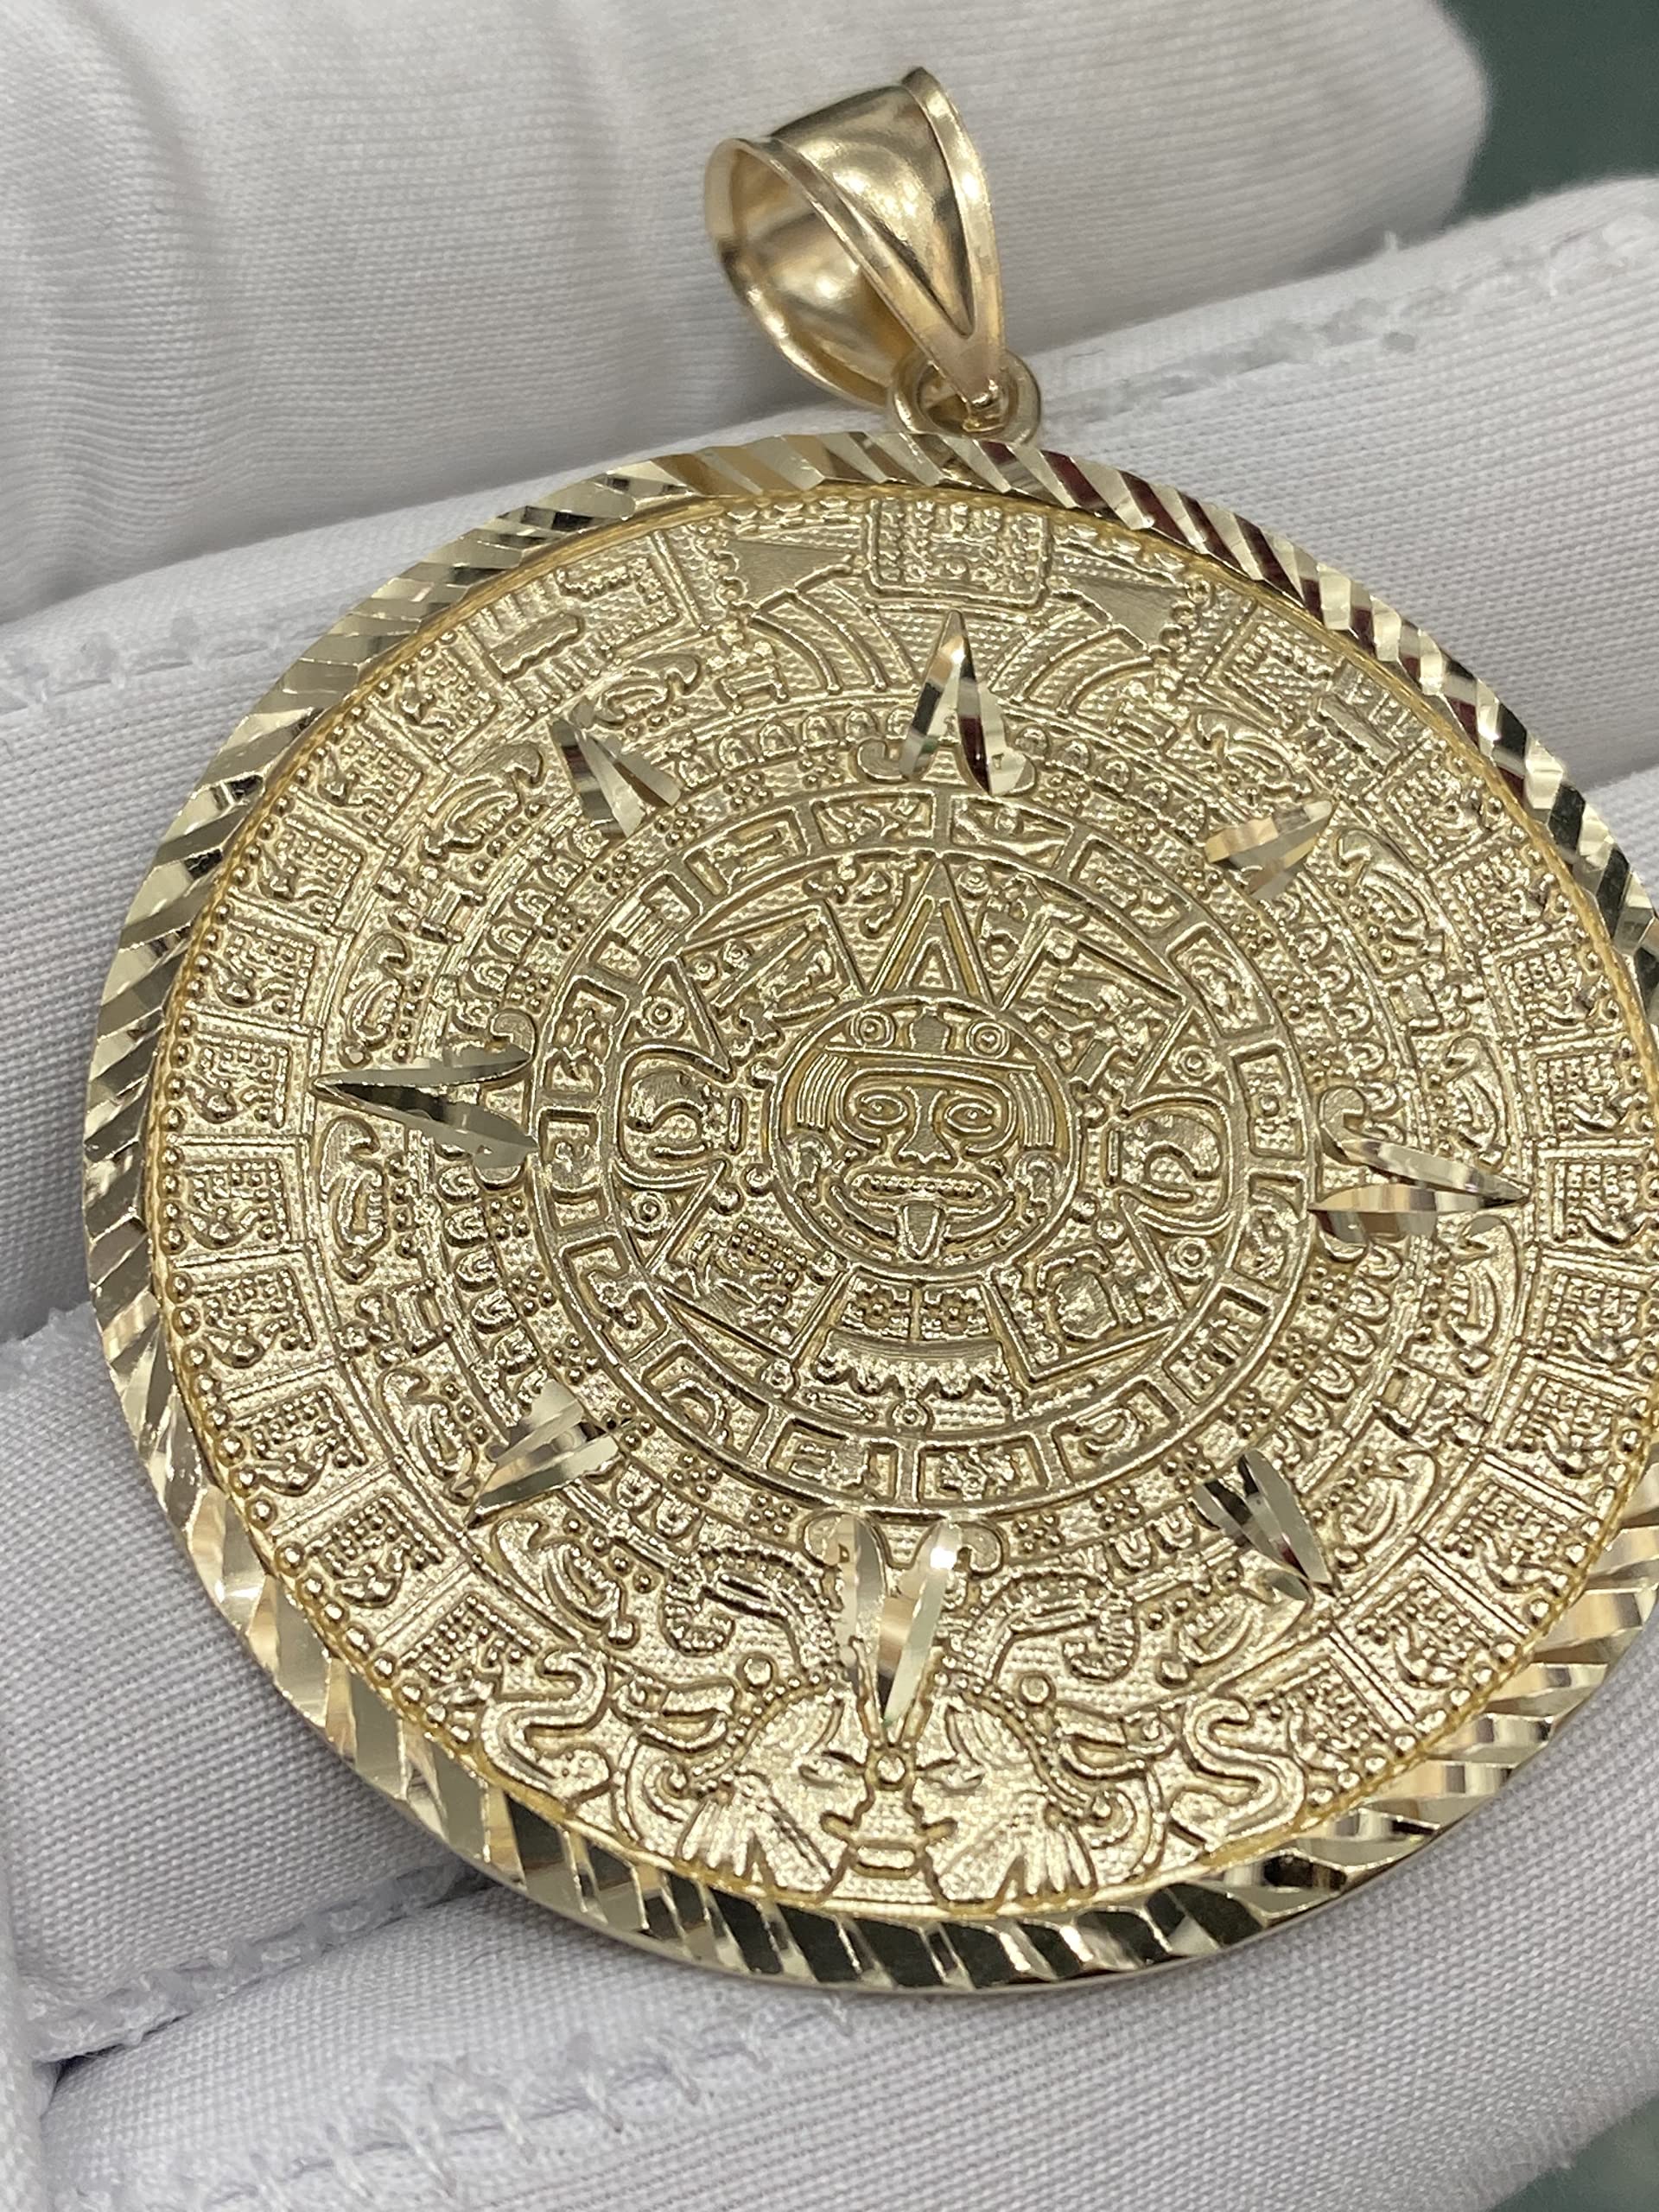 TGDJ 14K Yellow Gold Aztec Mayan Calendar Charm Pendant, 45x45 mm Diamond-Cut Ornate, Handmade Spiritual Symbol, Gold Stamped Fine Jewelry, Great Gift for Men & Women (45mm)